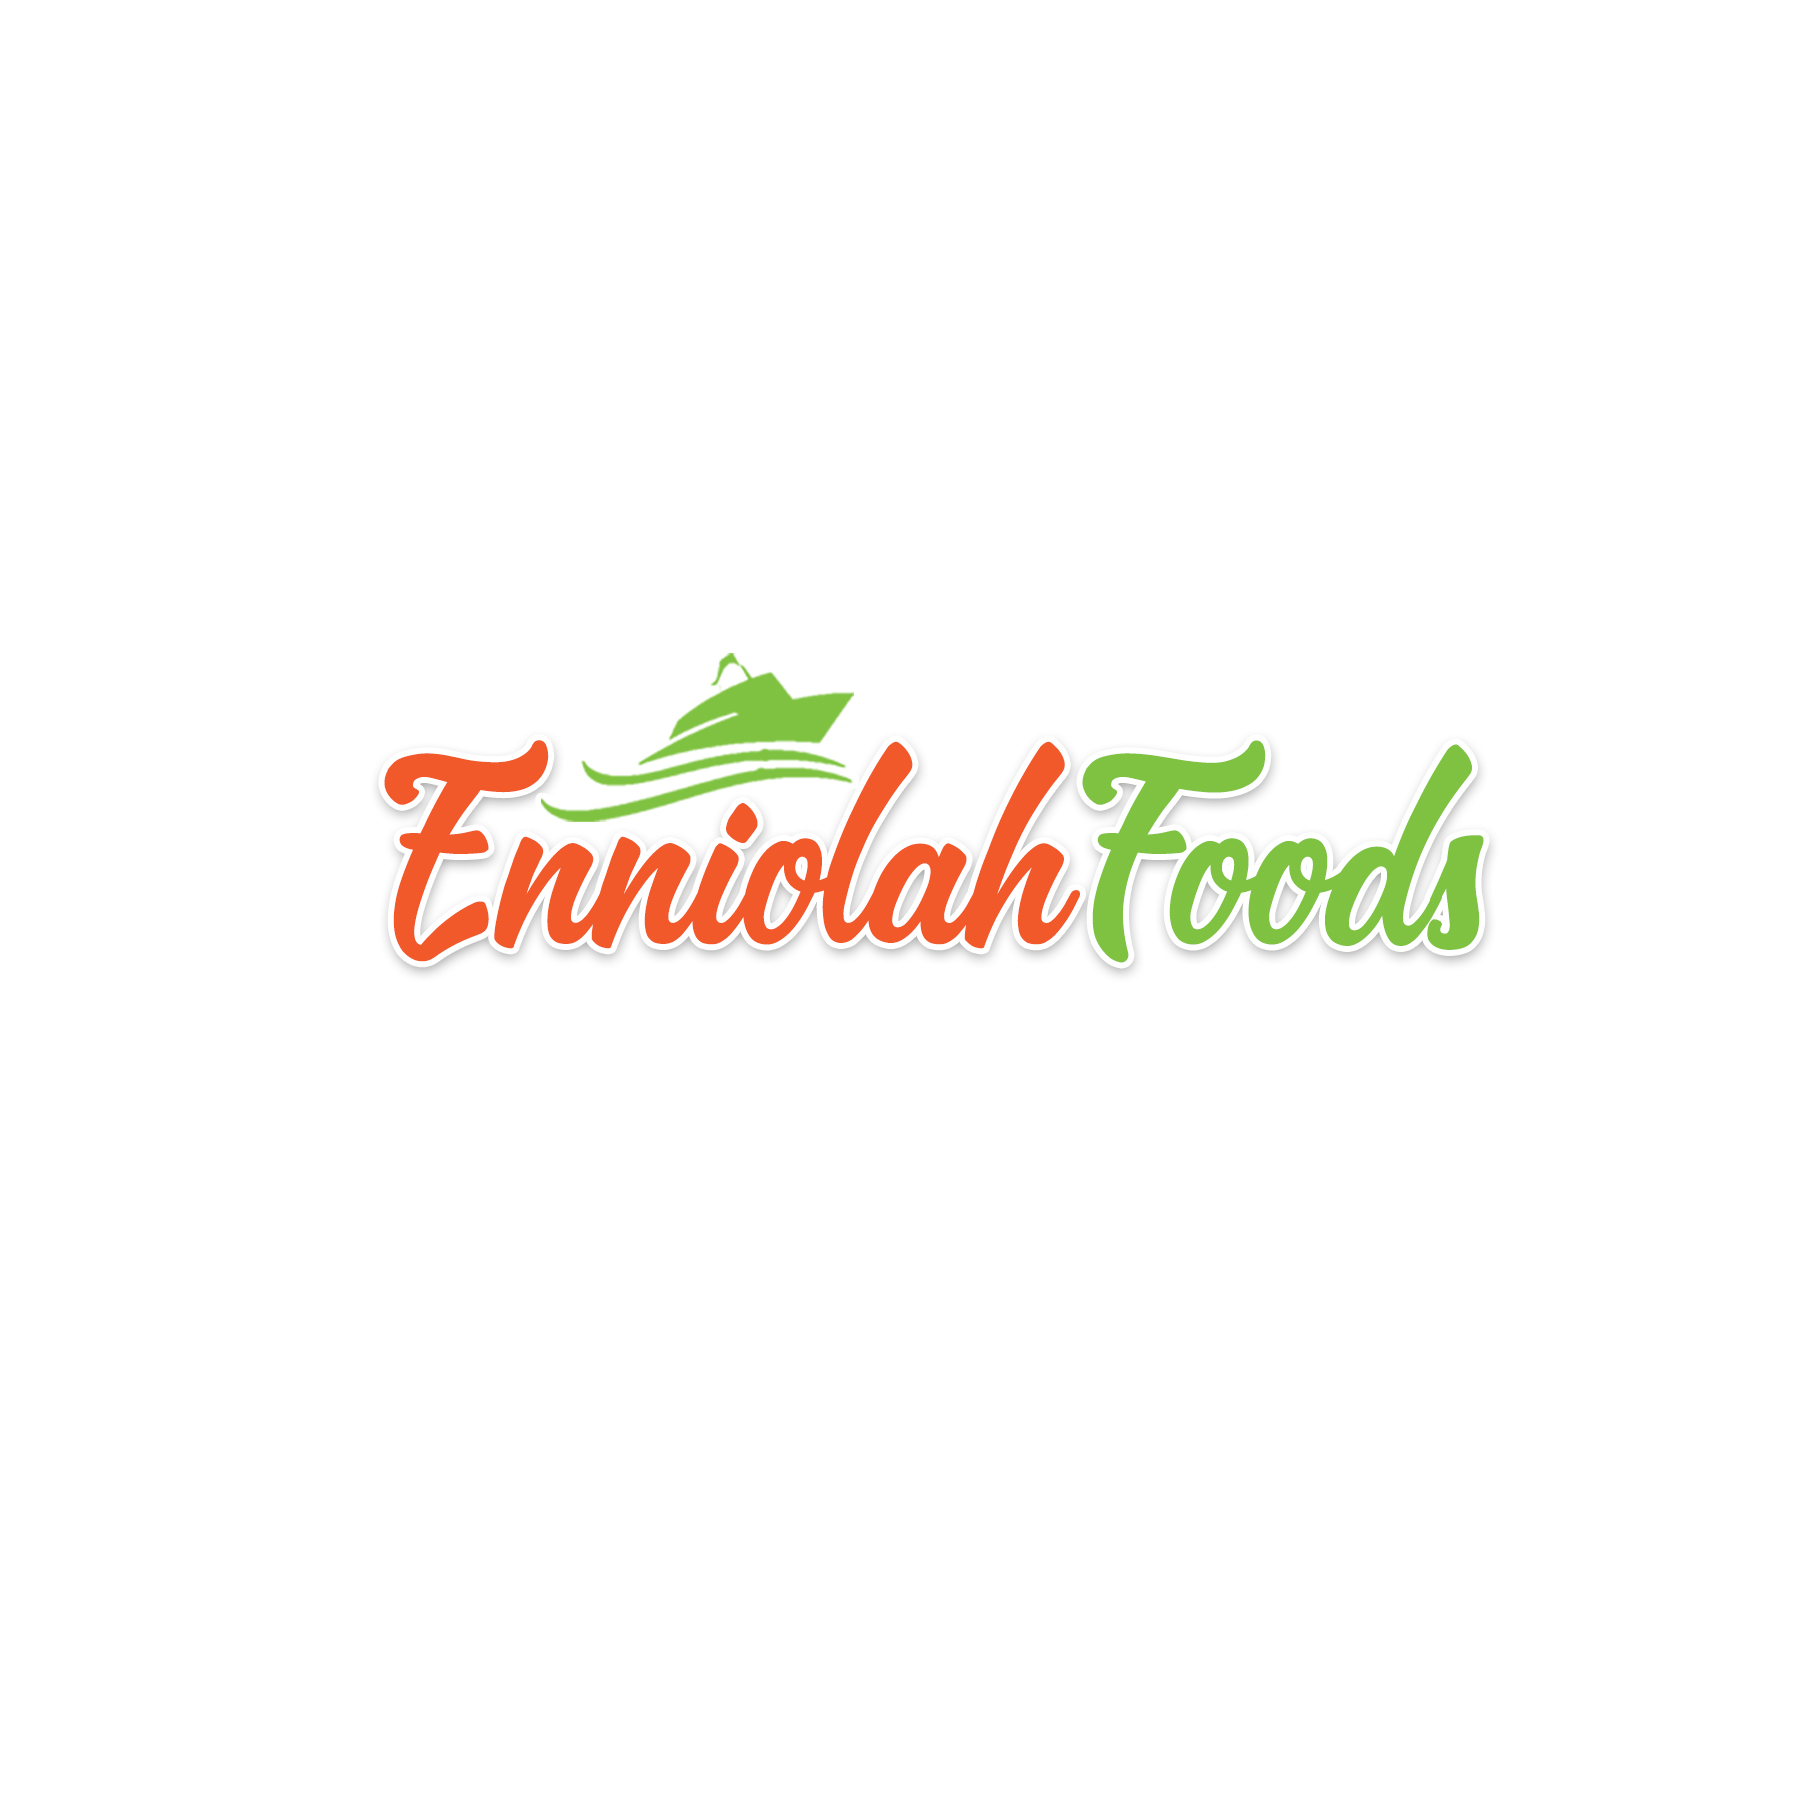 ENNIOLAH FOODS